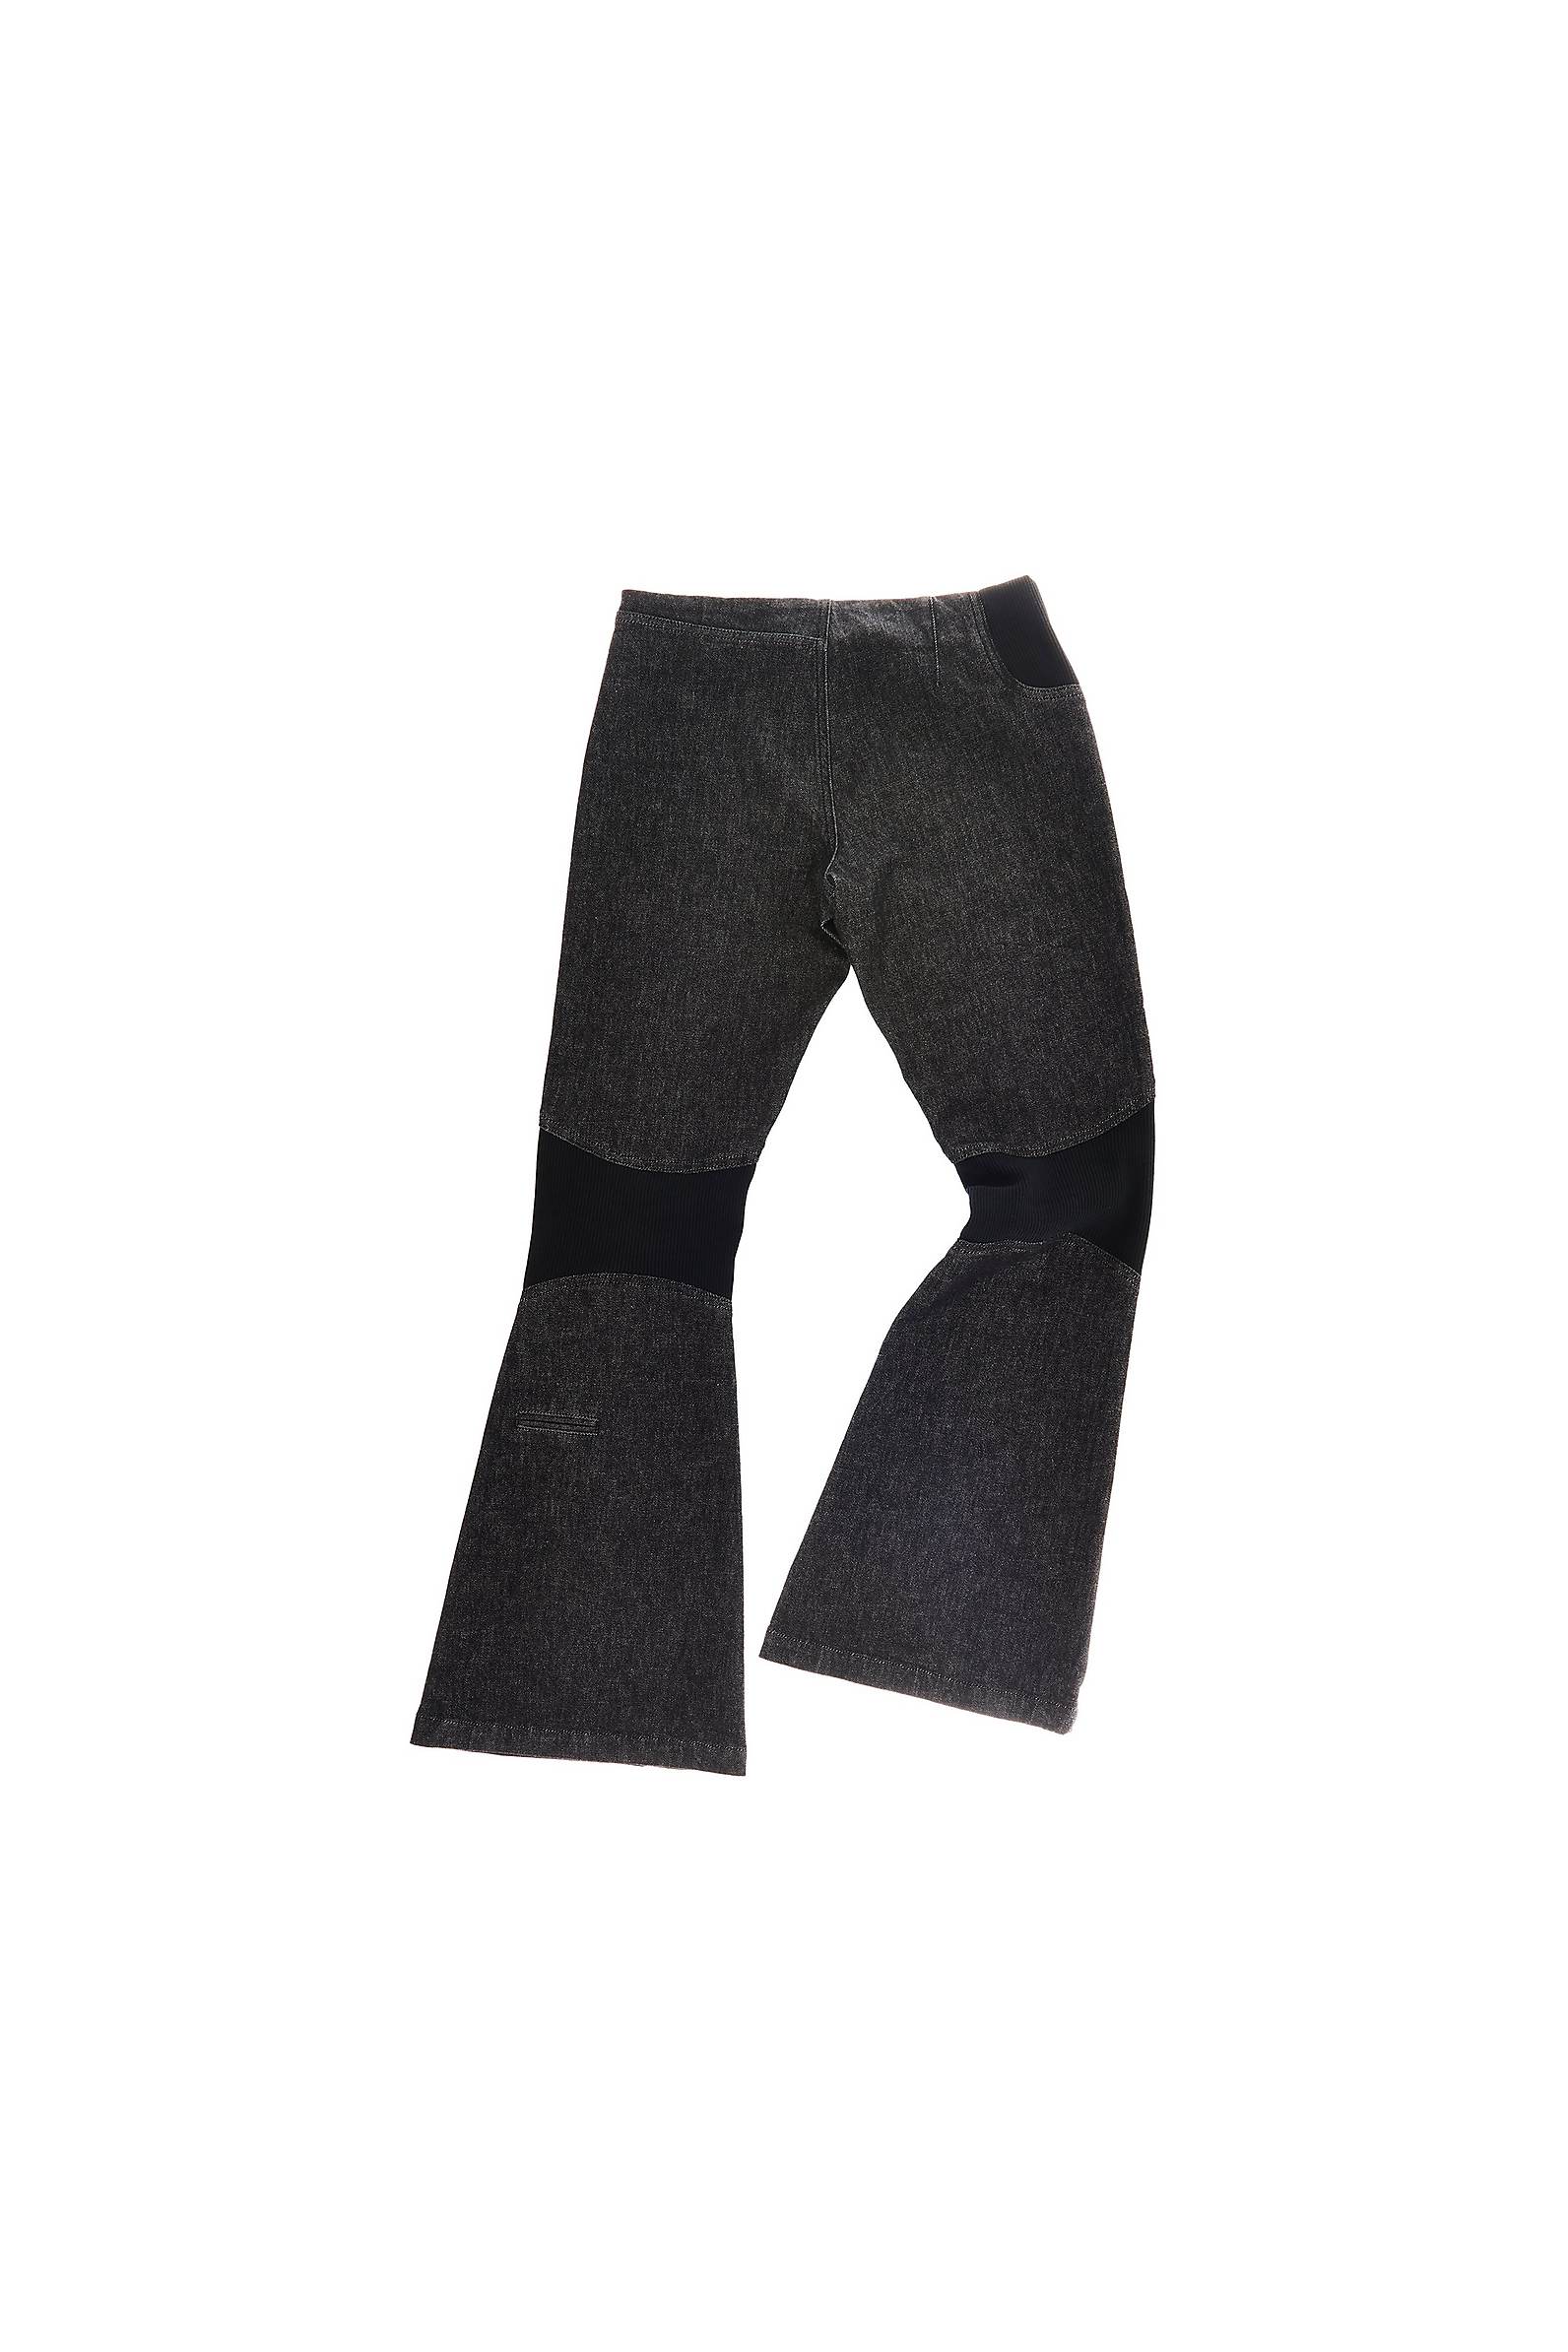 Denim And Rib | Marc Heaven Jacobs Jeans